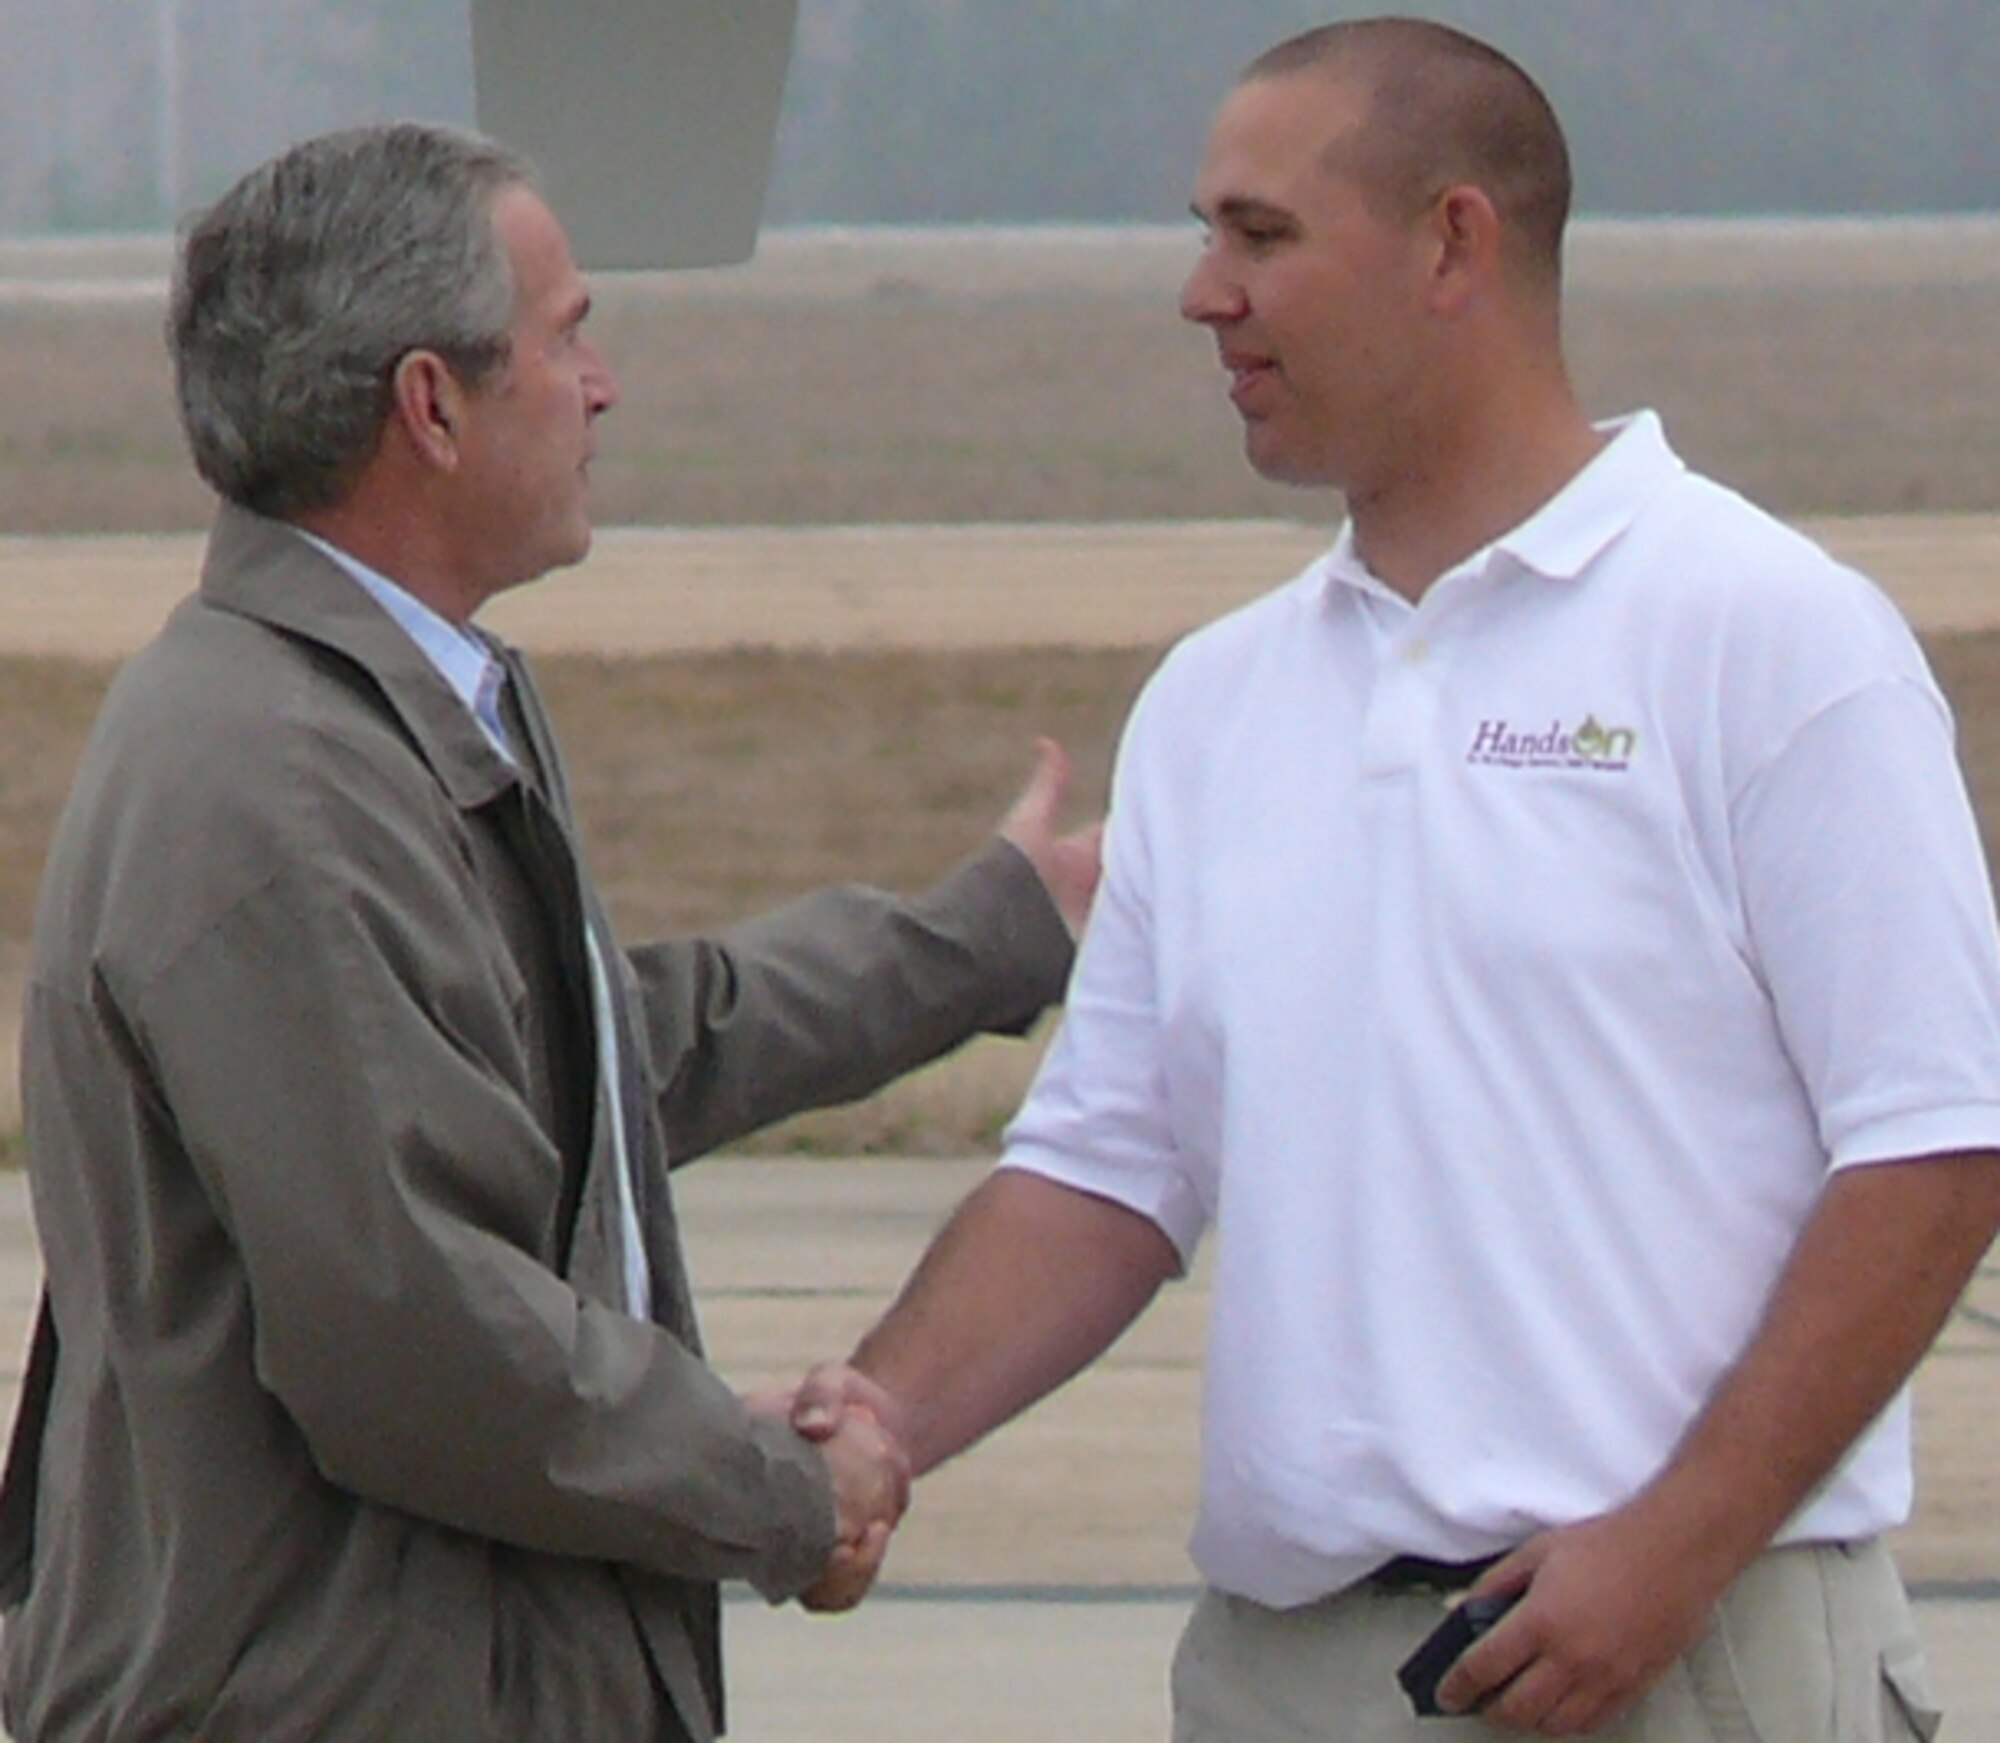 President Bush thanks Airman Petz for his volunteer service.